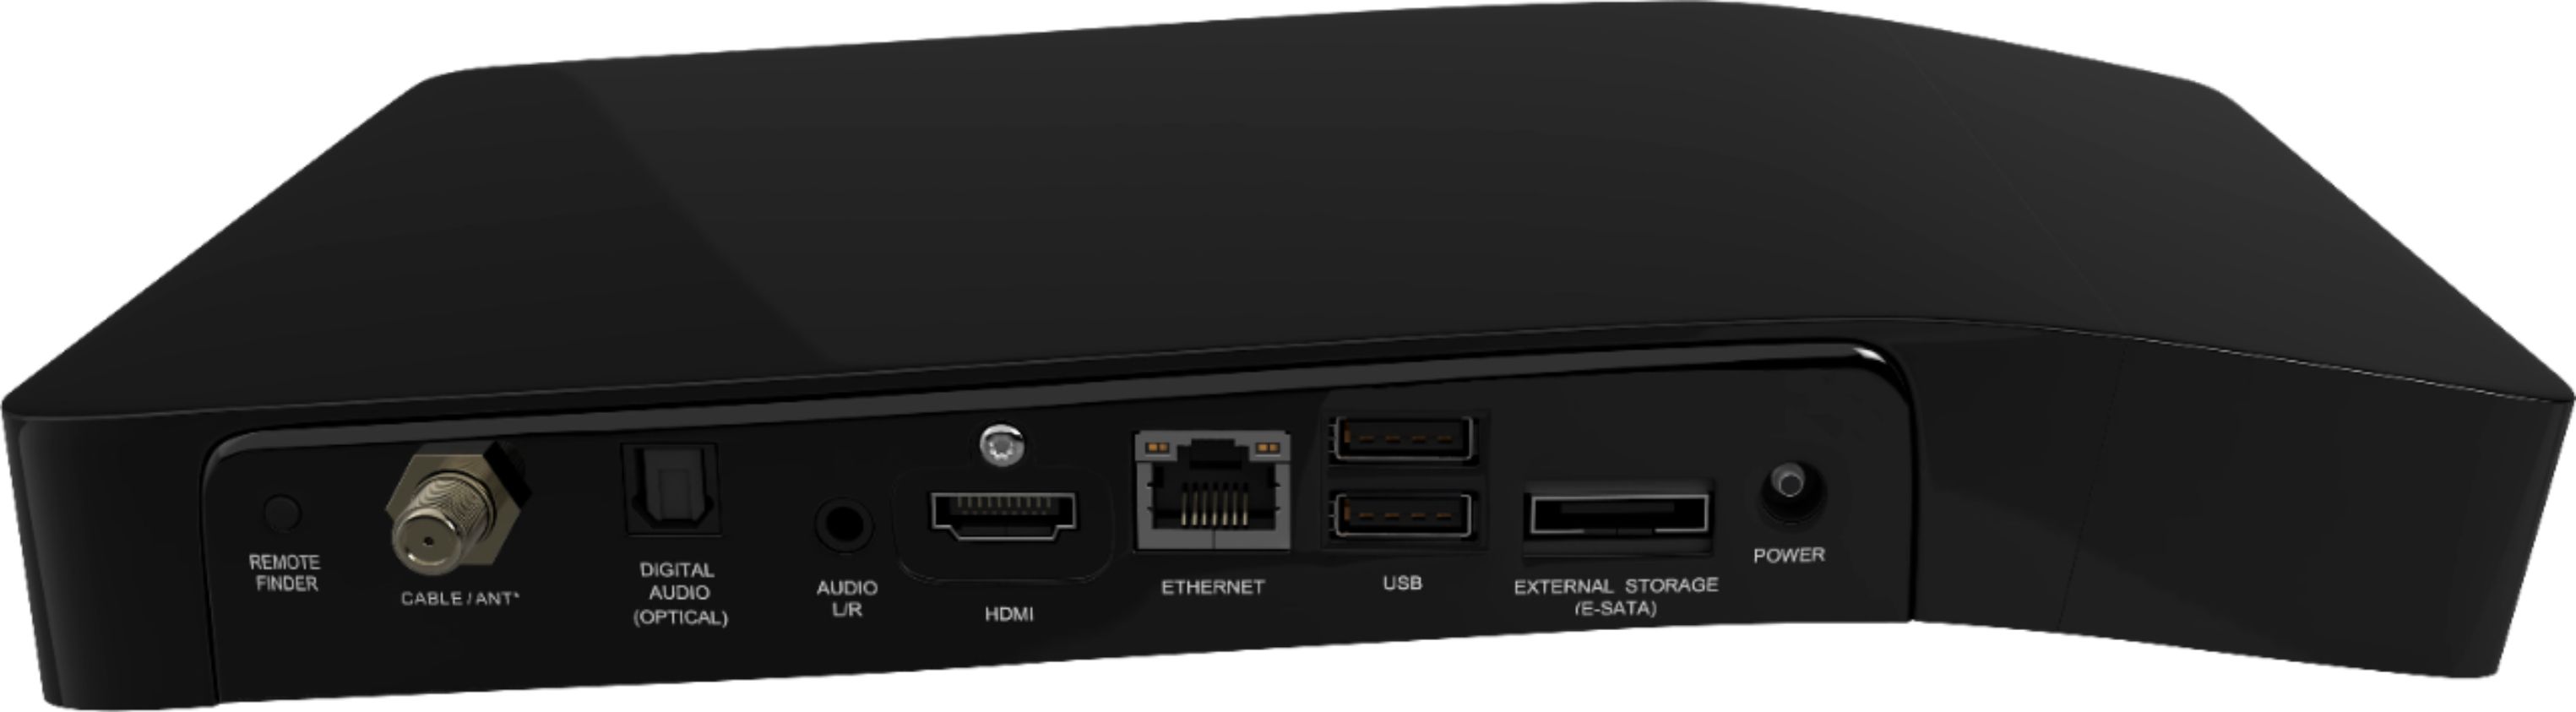 Customer Reviews: TiVo BOLT OTA 1TB DVR & Streaming Player Black ...